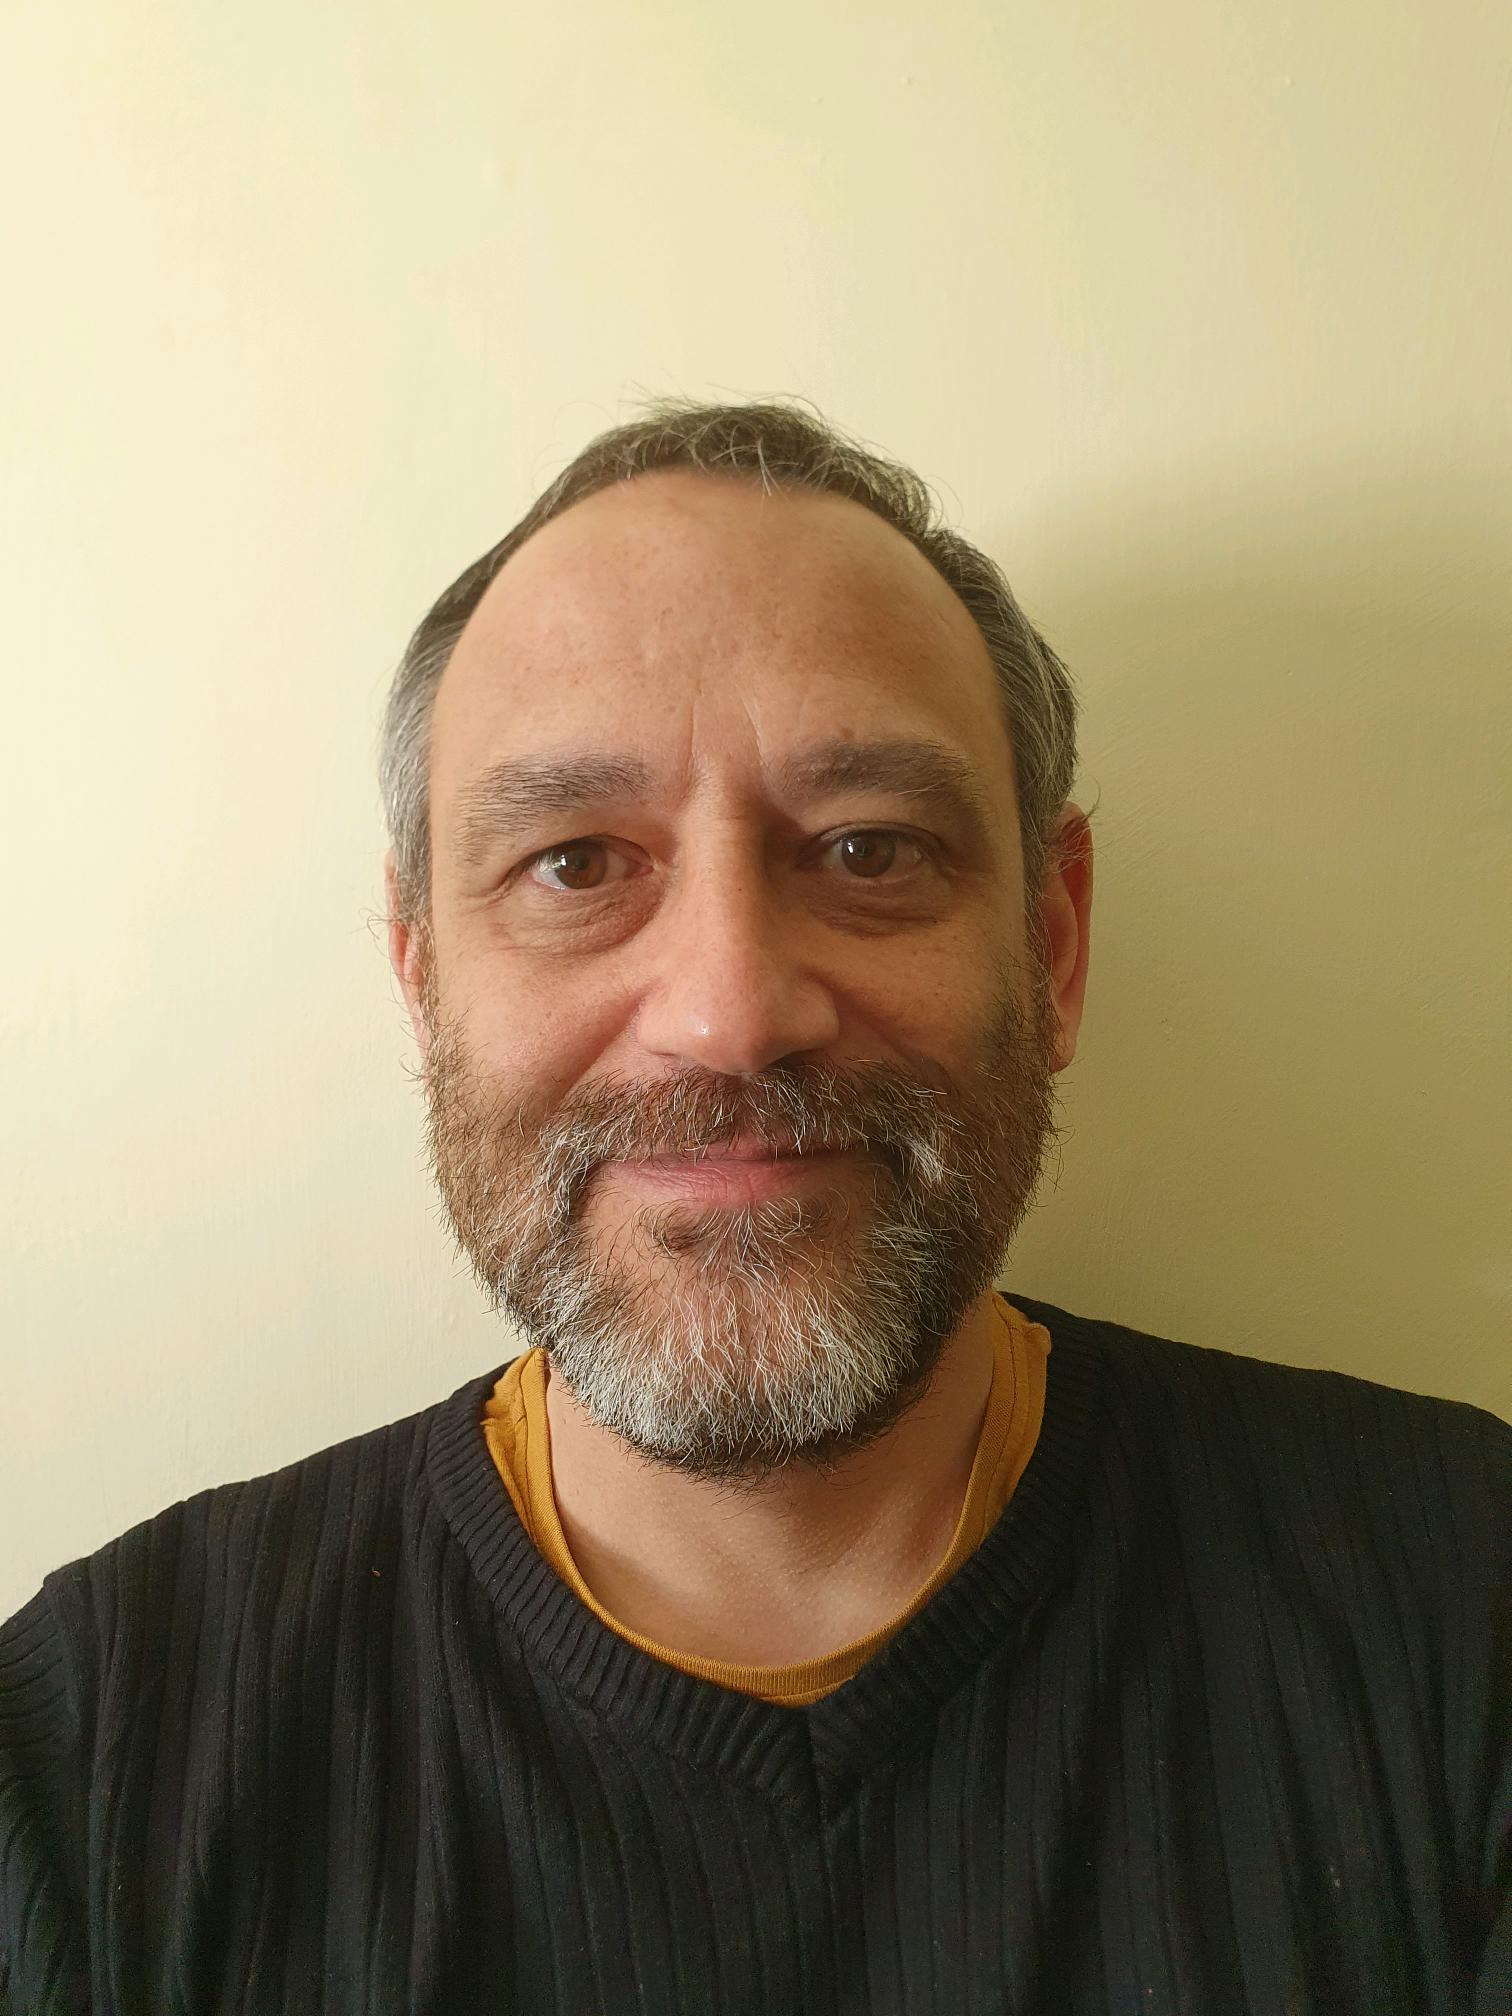 A man with a beard, wearing a black jumper.